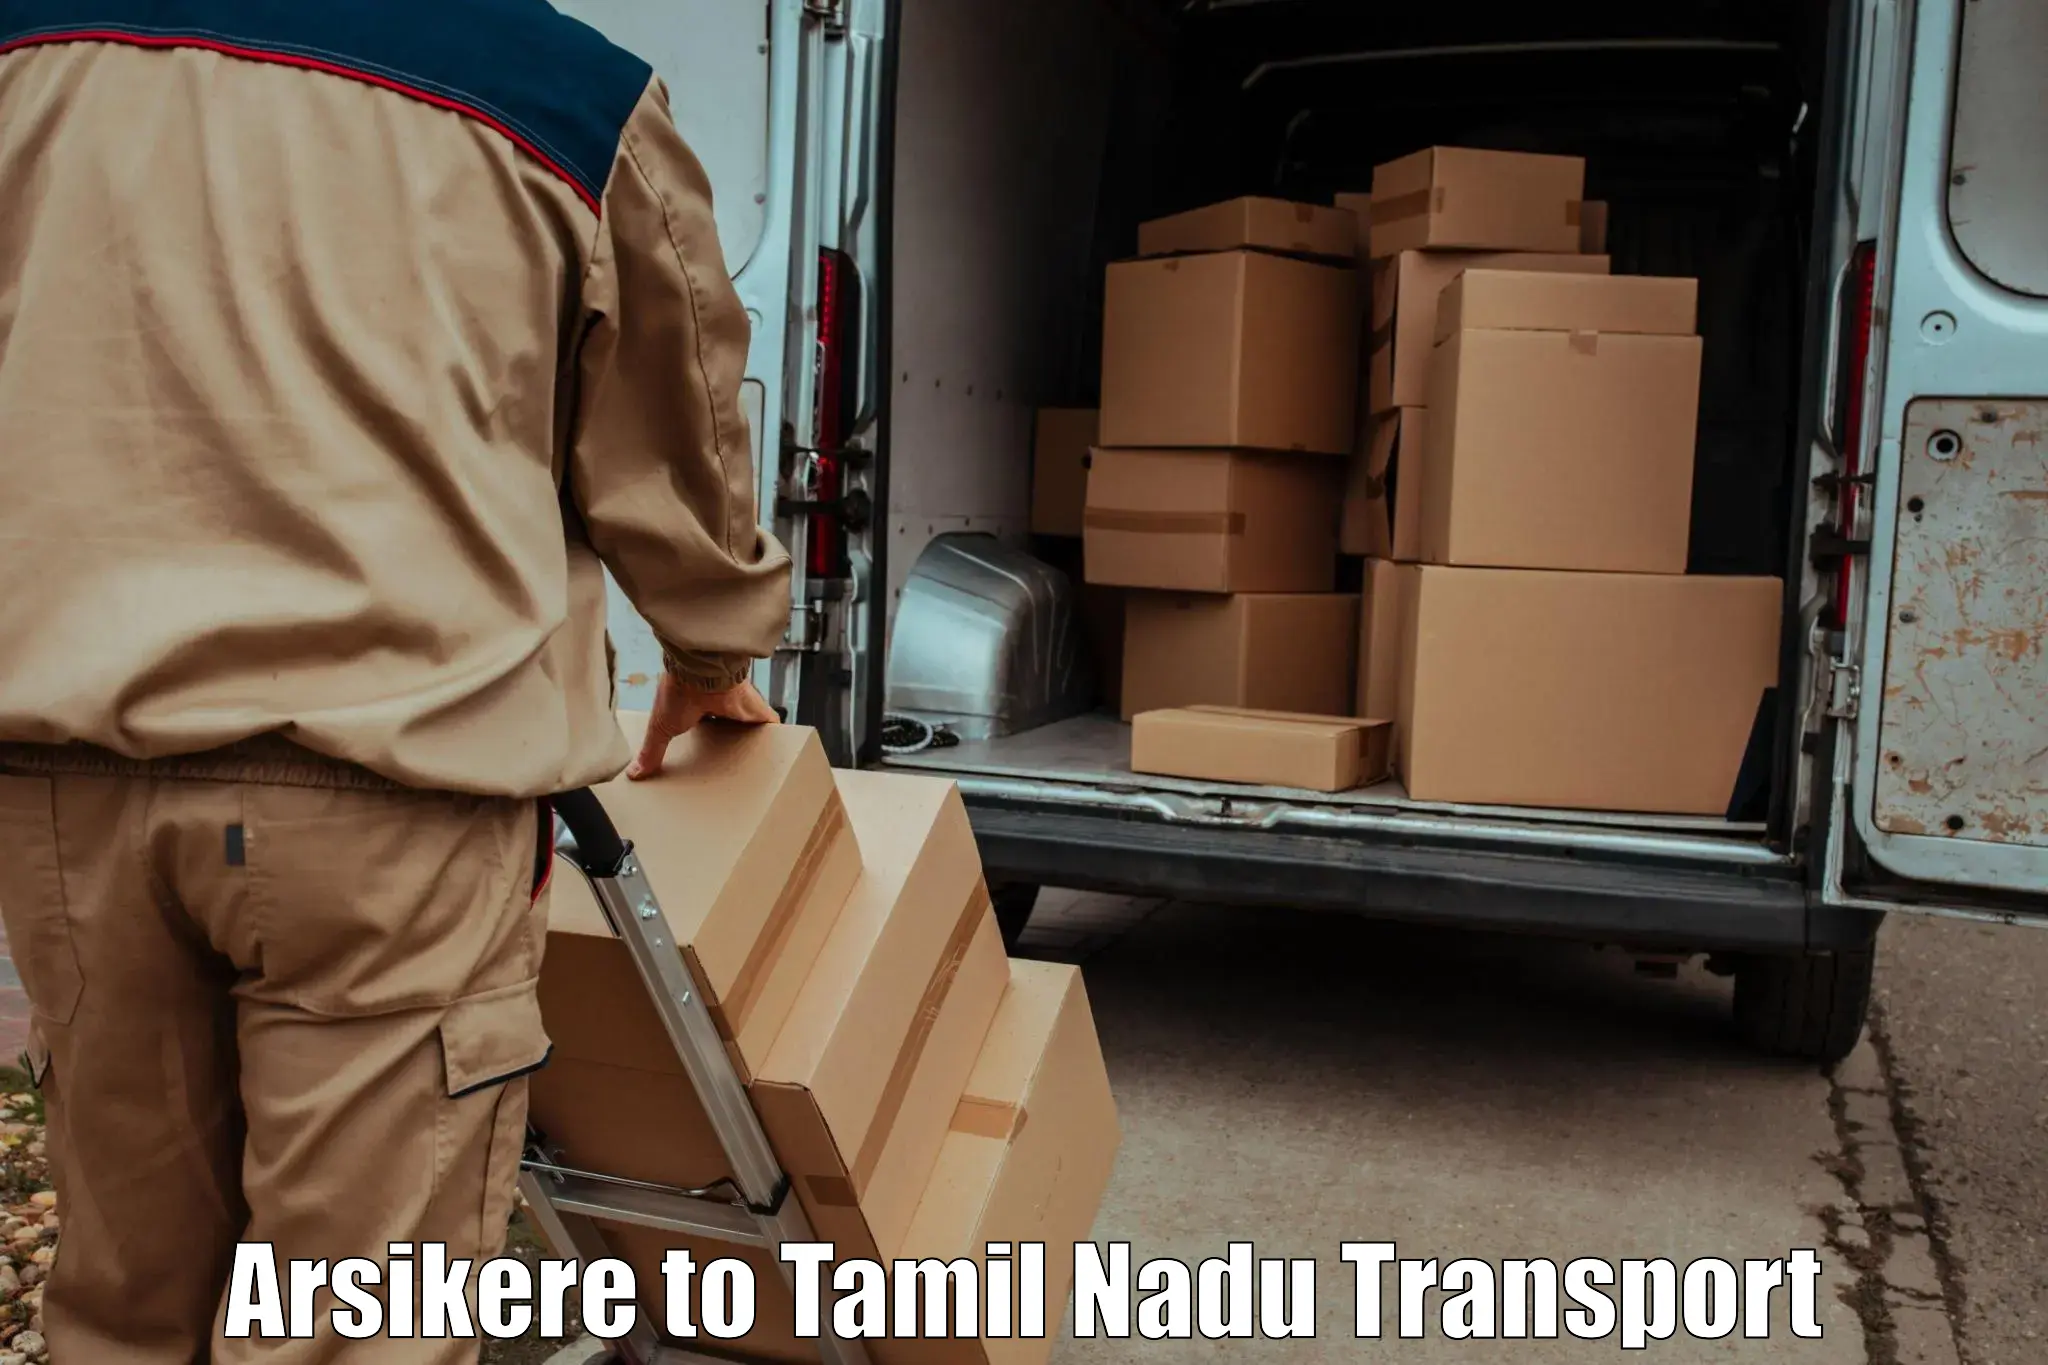 Furniture transport service Arsikere to Kodaikanal